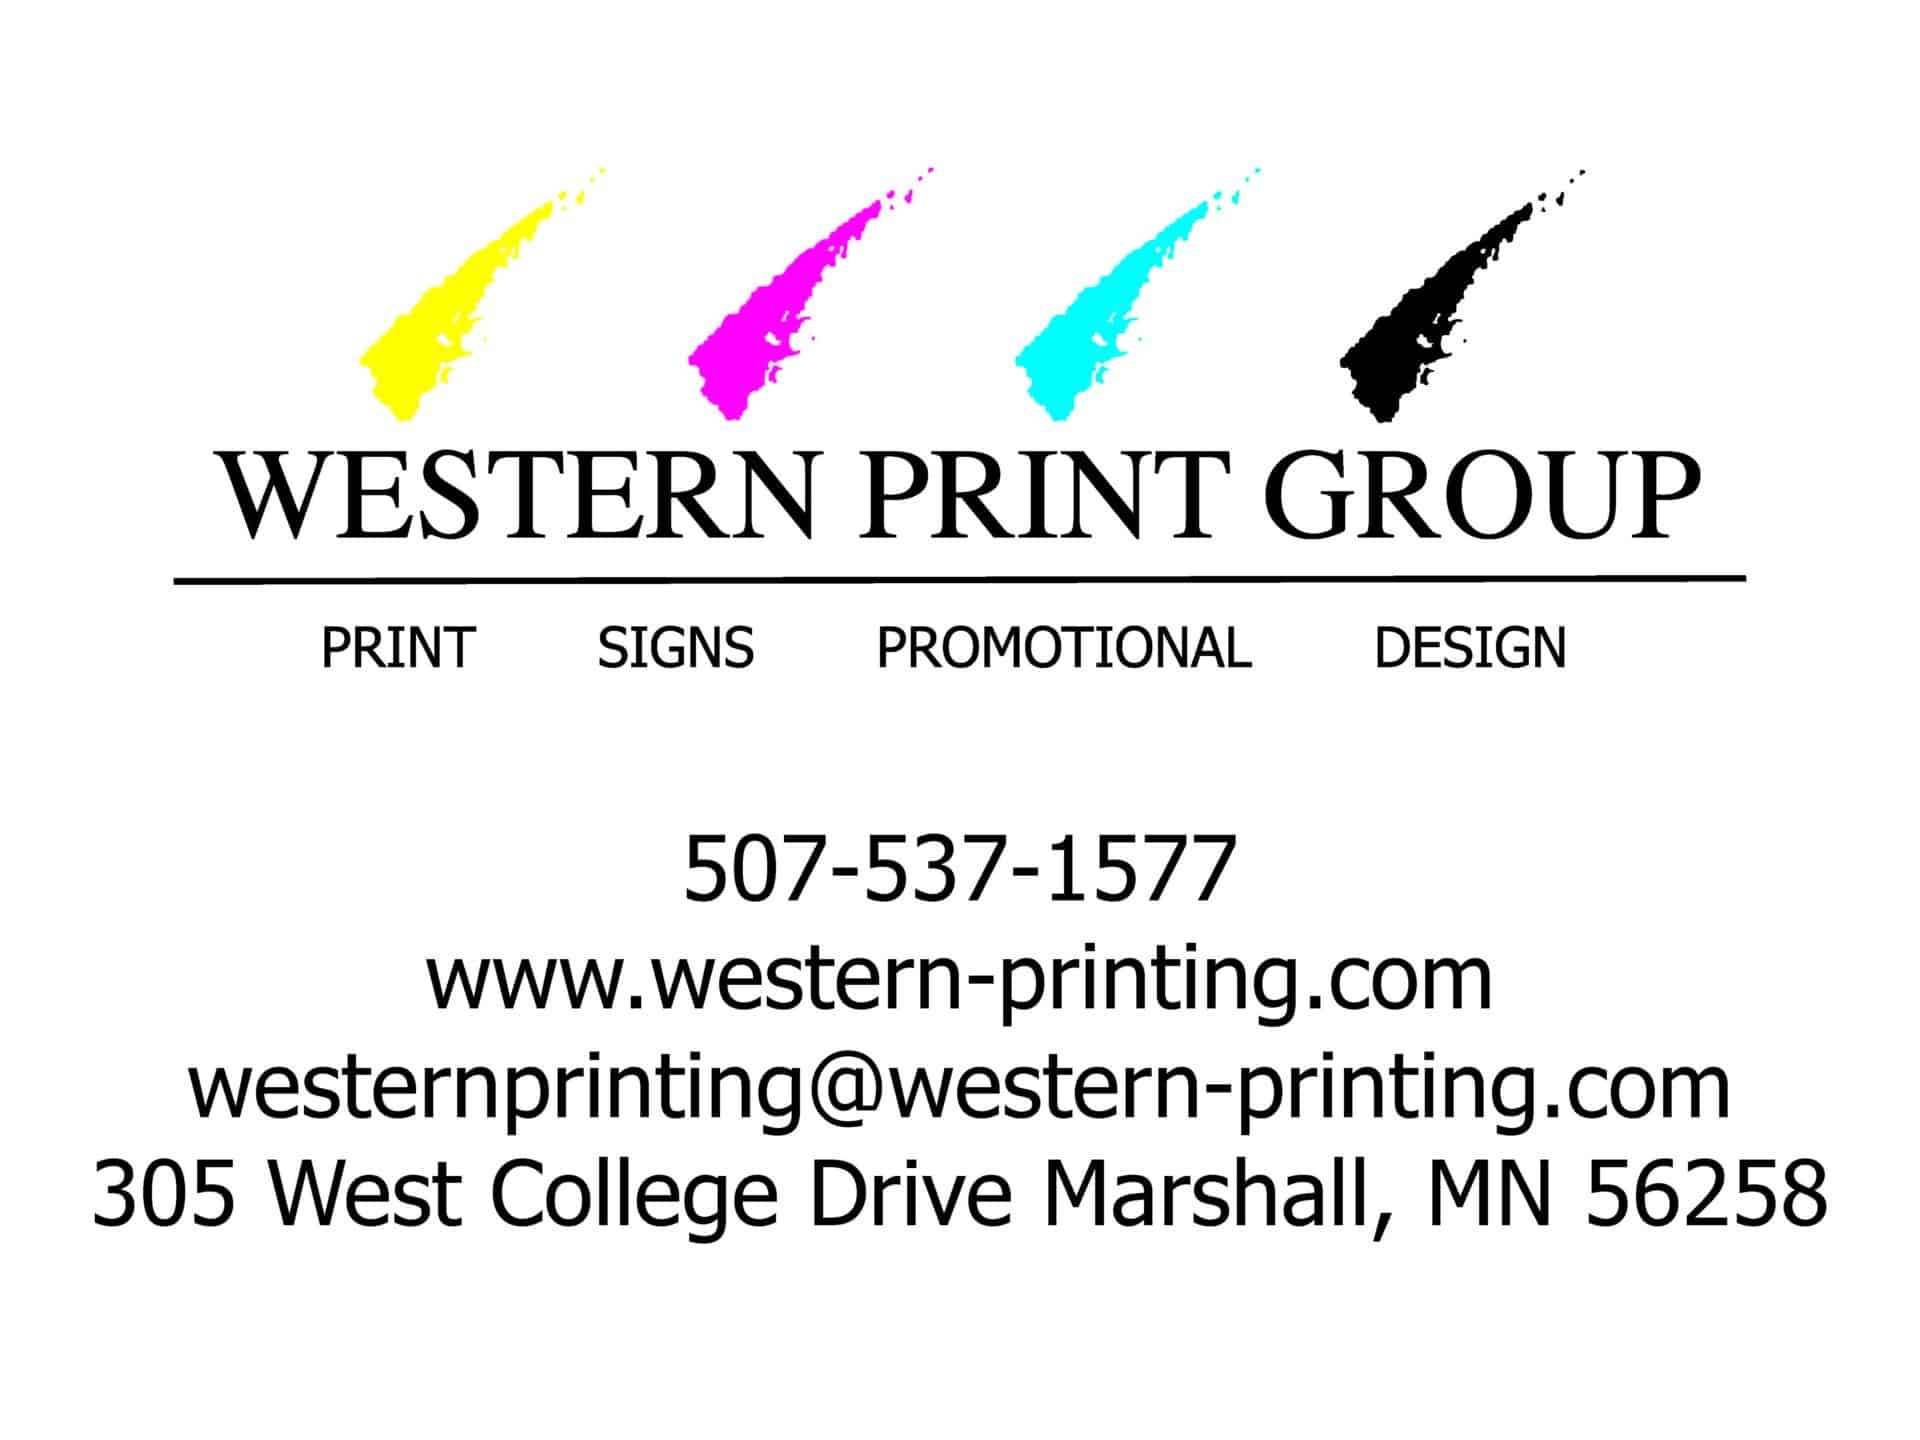 Western Print Group